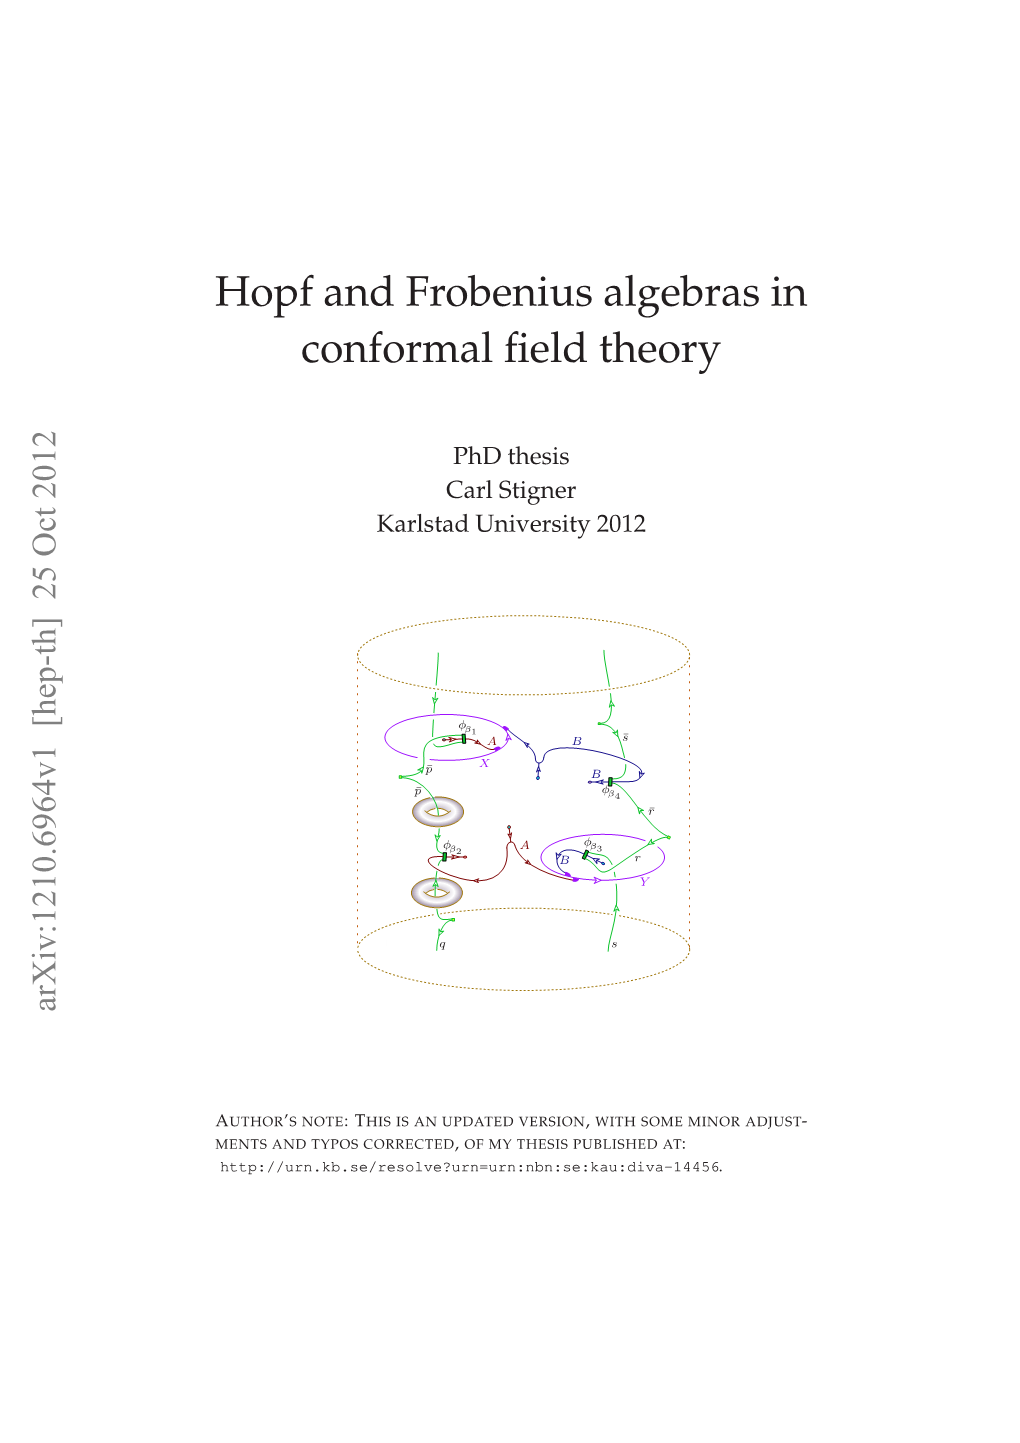 Hopf and Frobenius Algebras in Conformal Field Theory